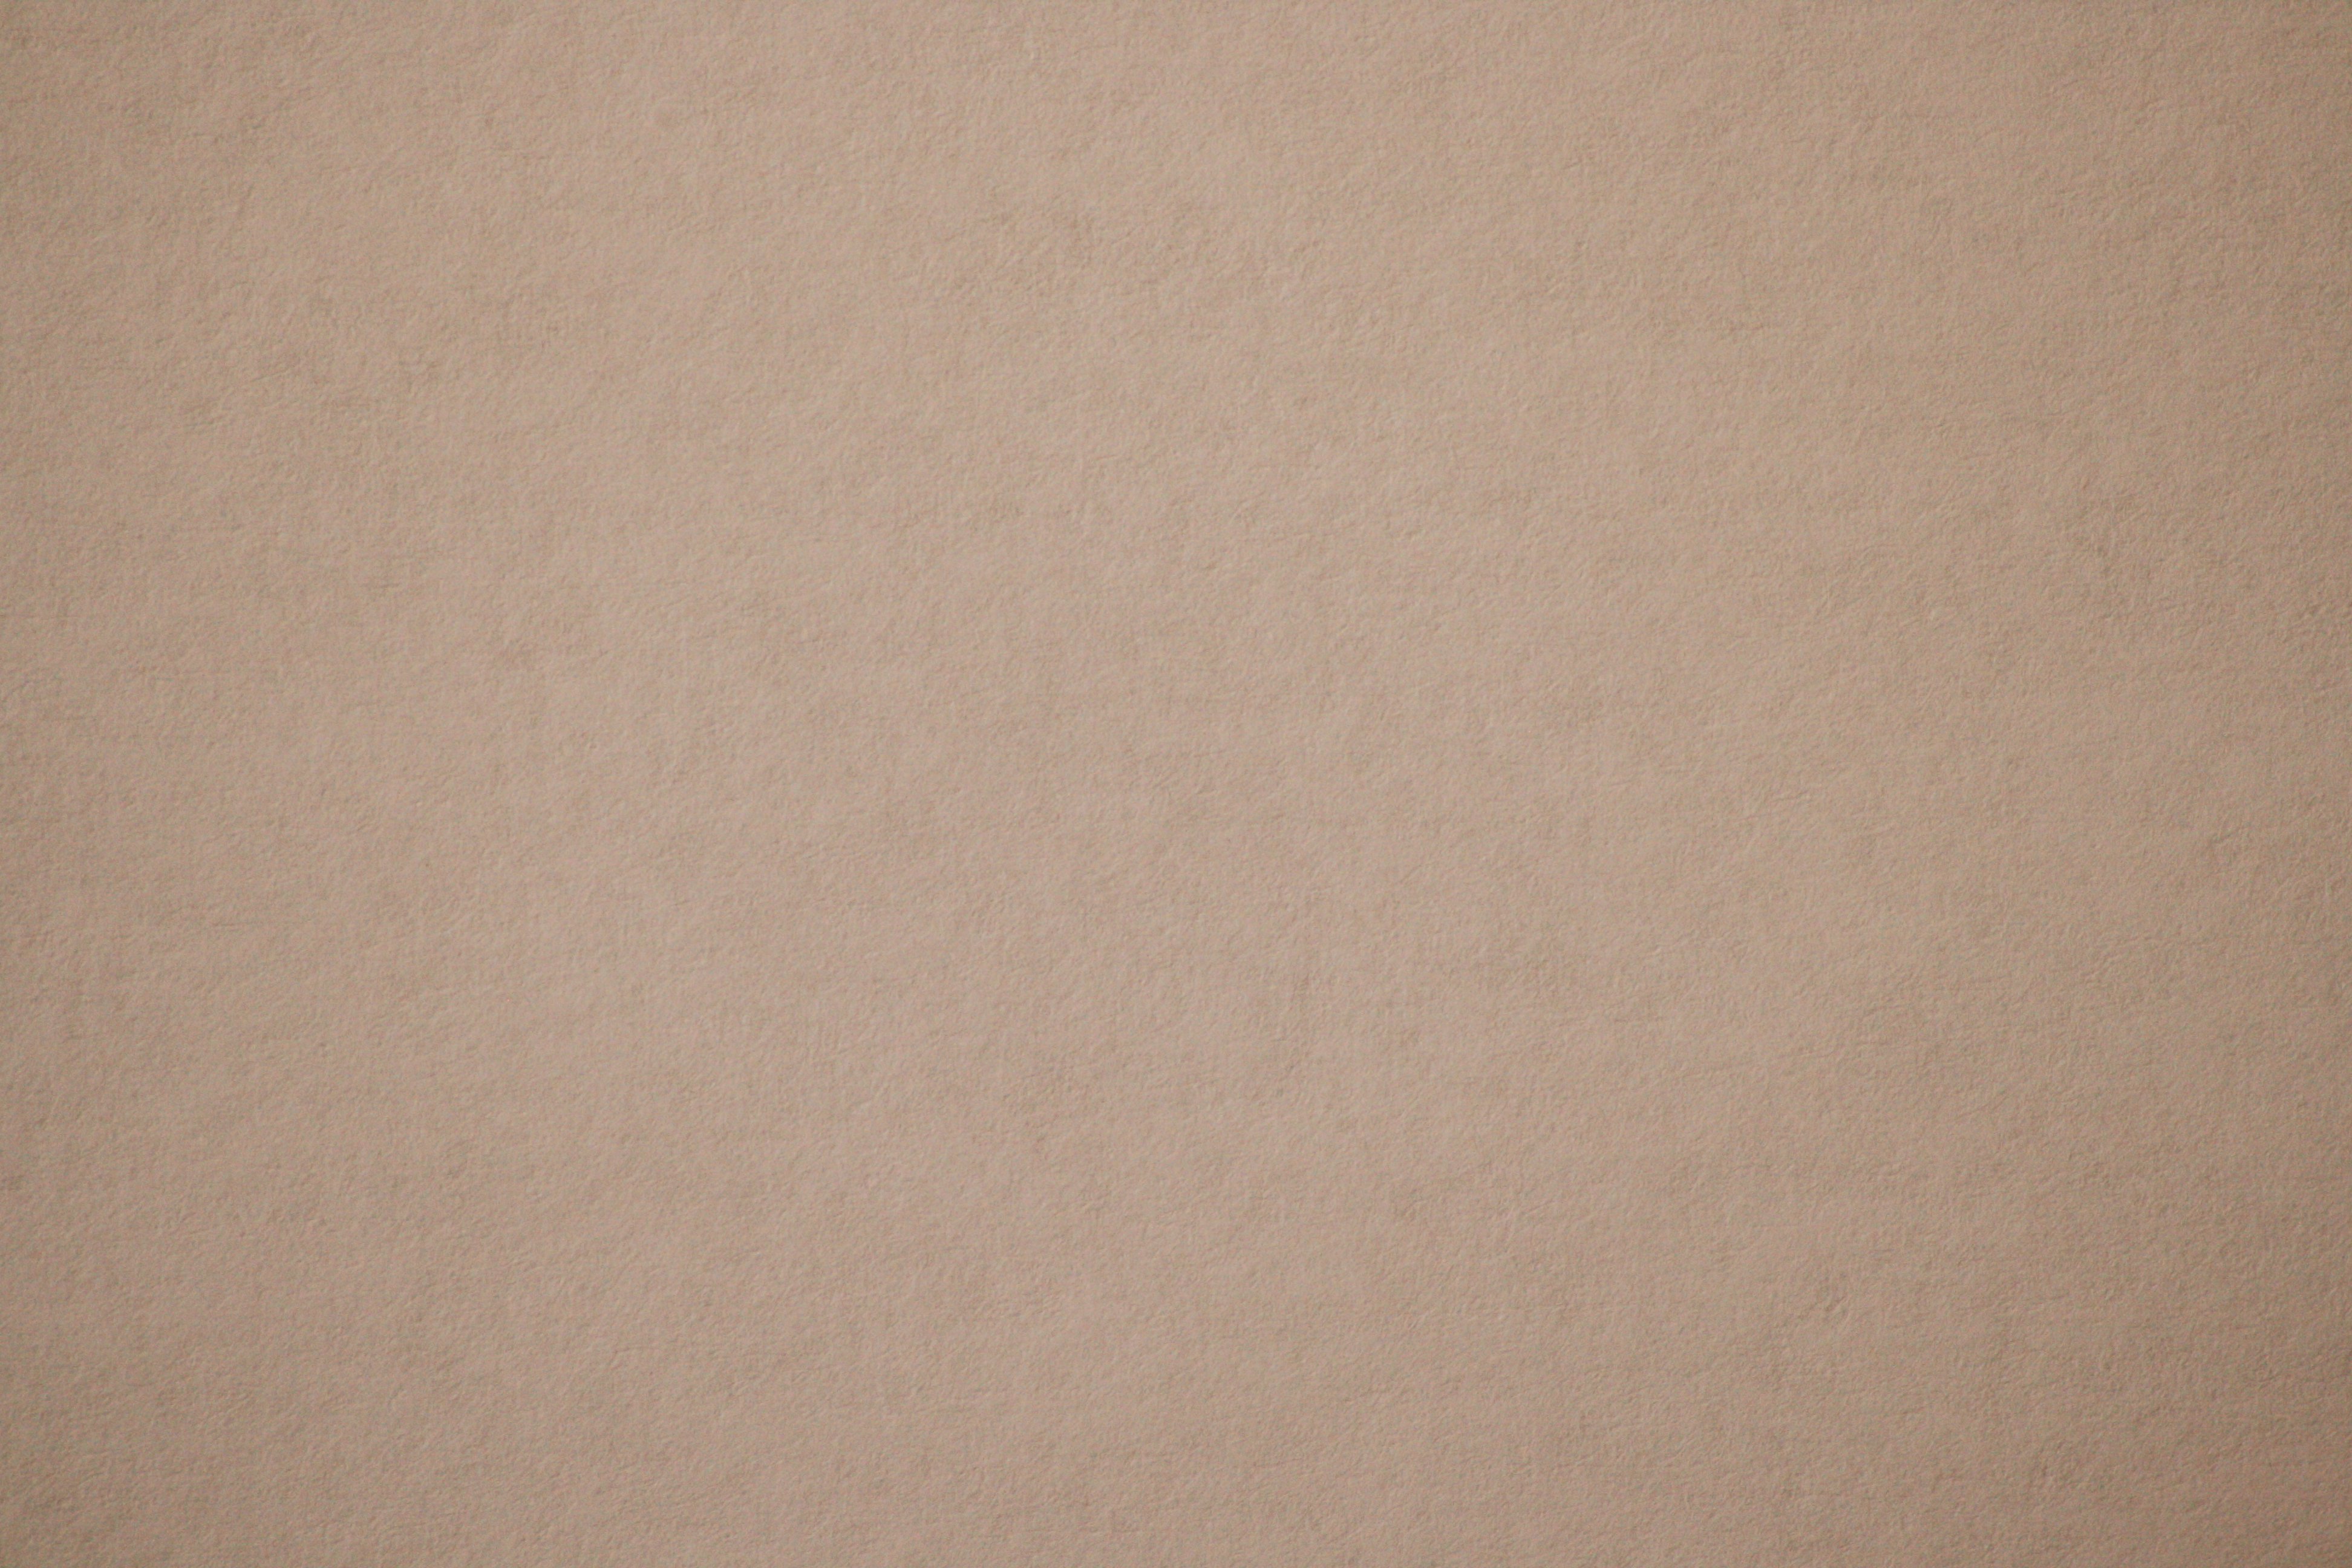 light tan paper background